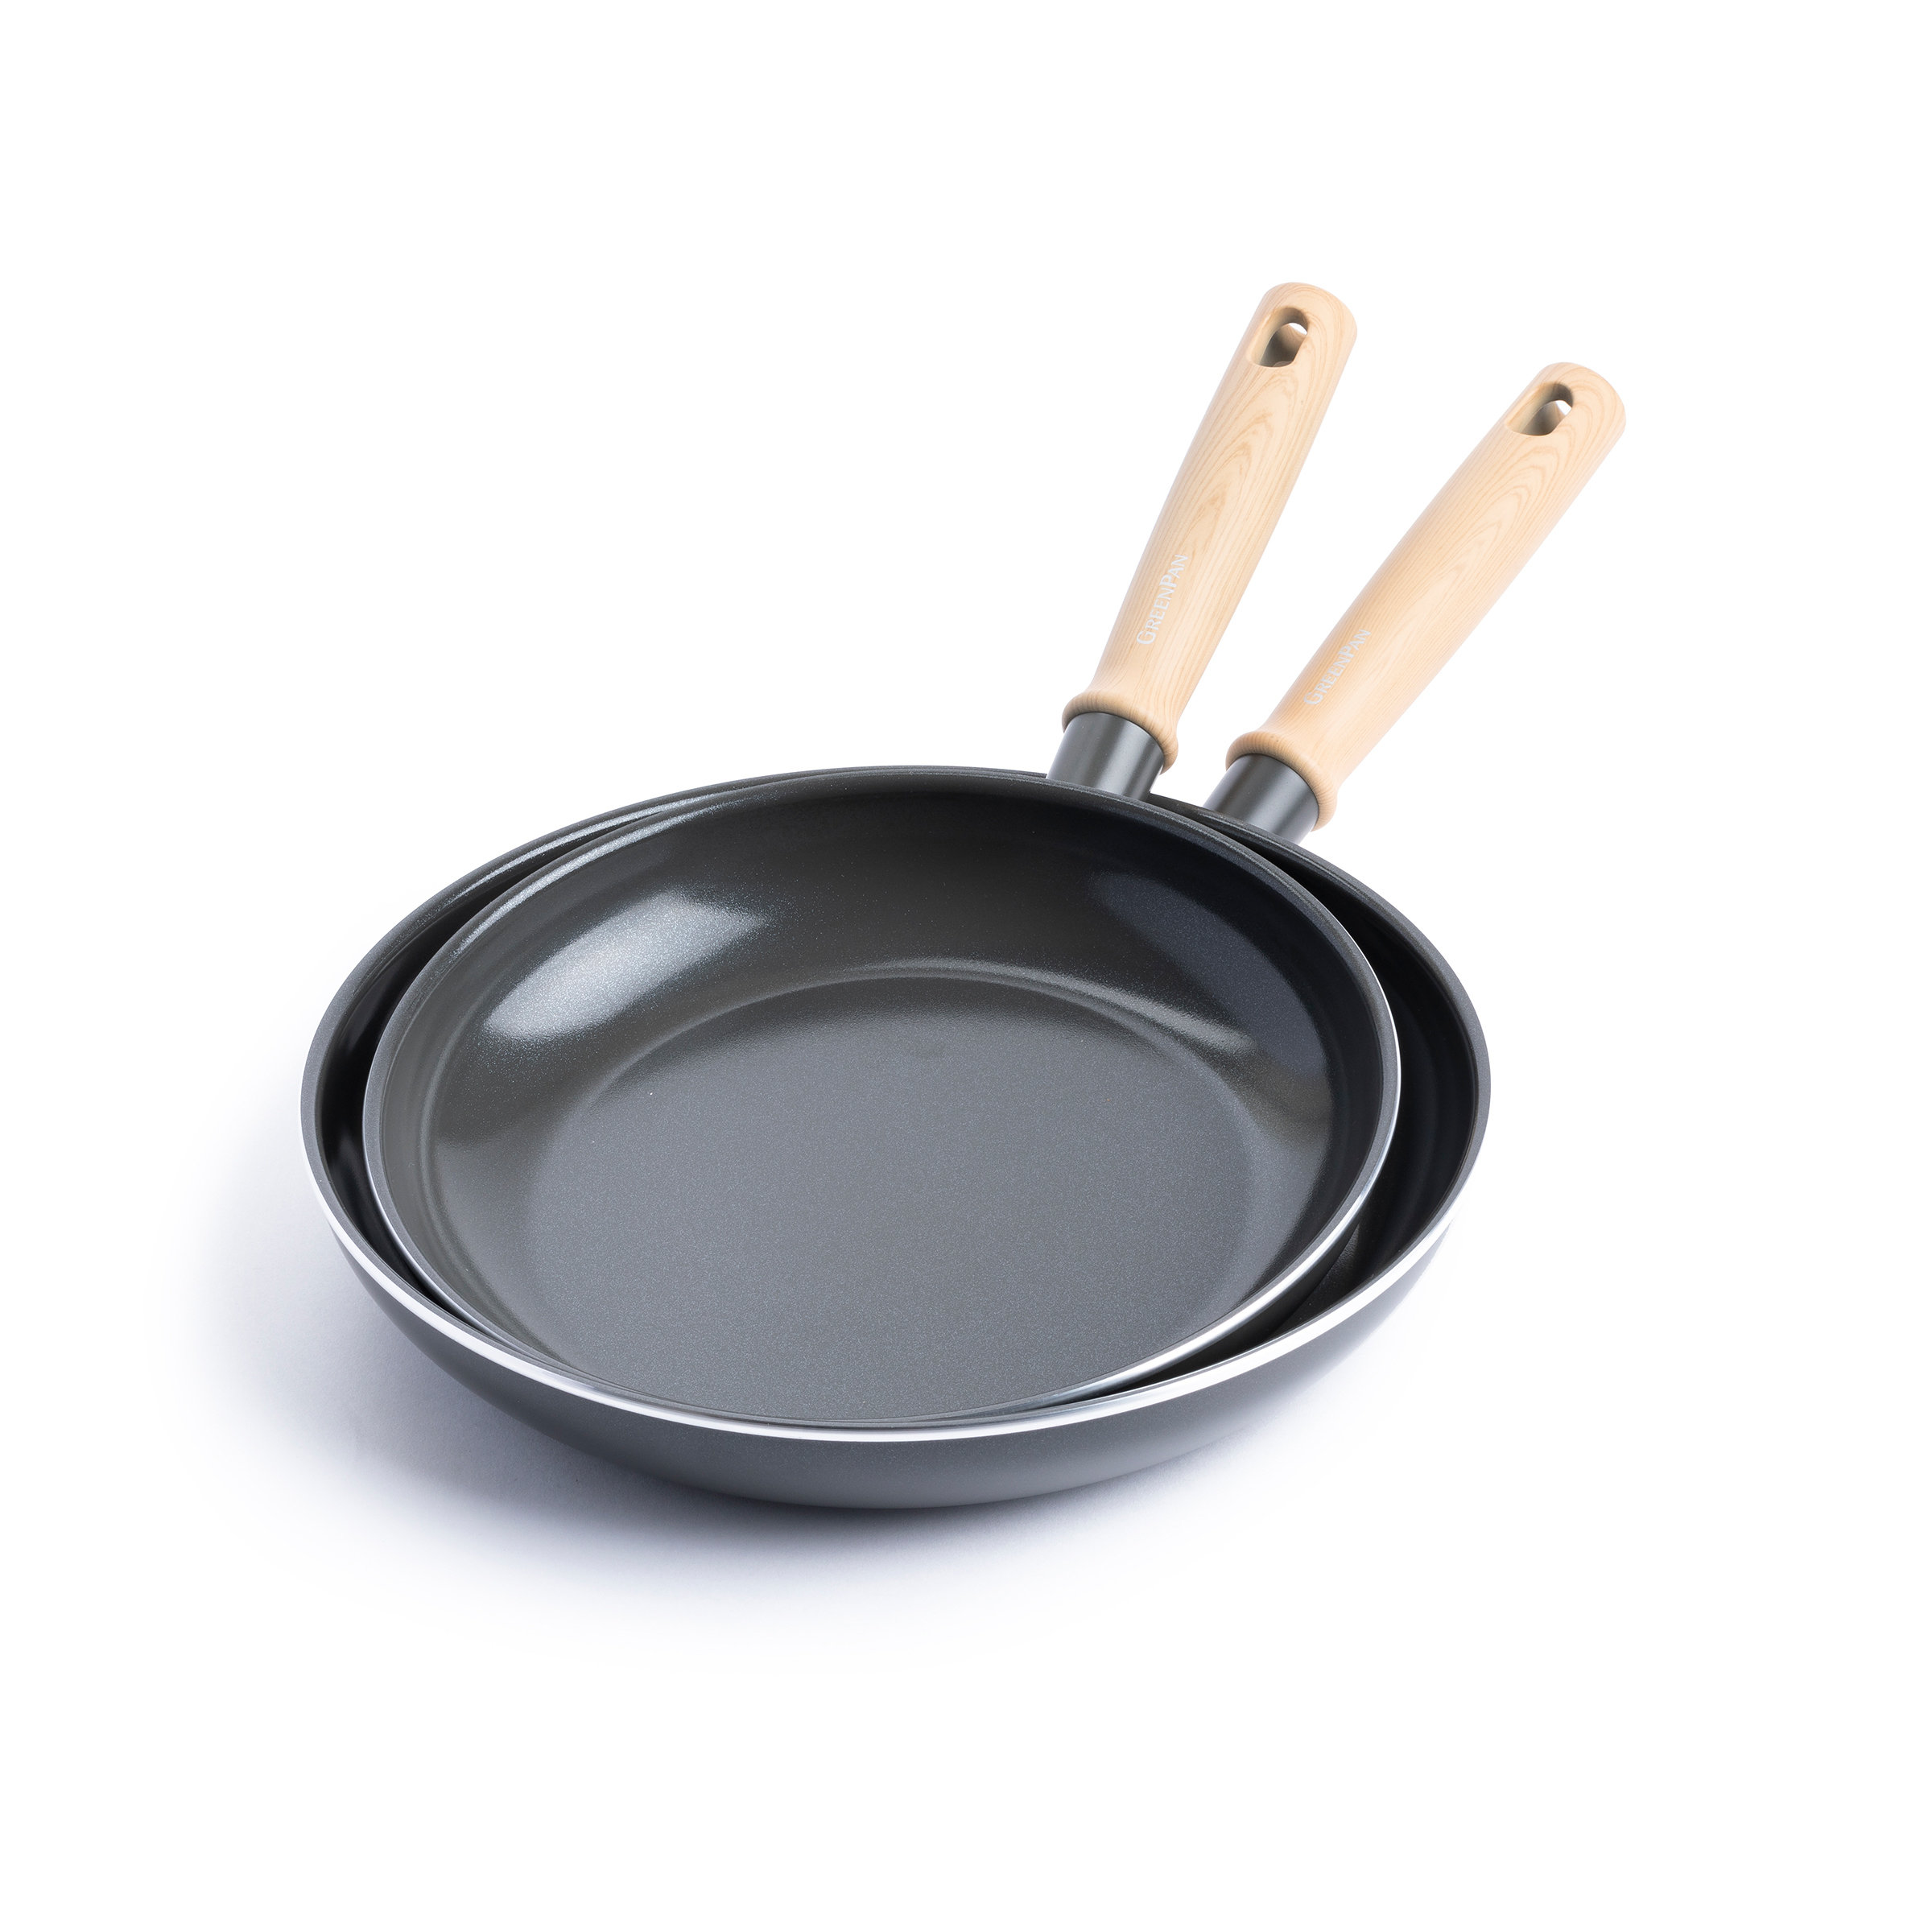 GreenPan Hudson Healthy Ceramic Nonstick, Frying Pan/Skillet, 12, Black 